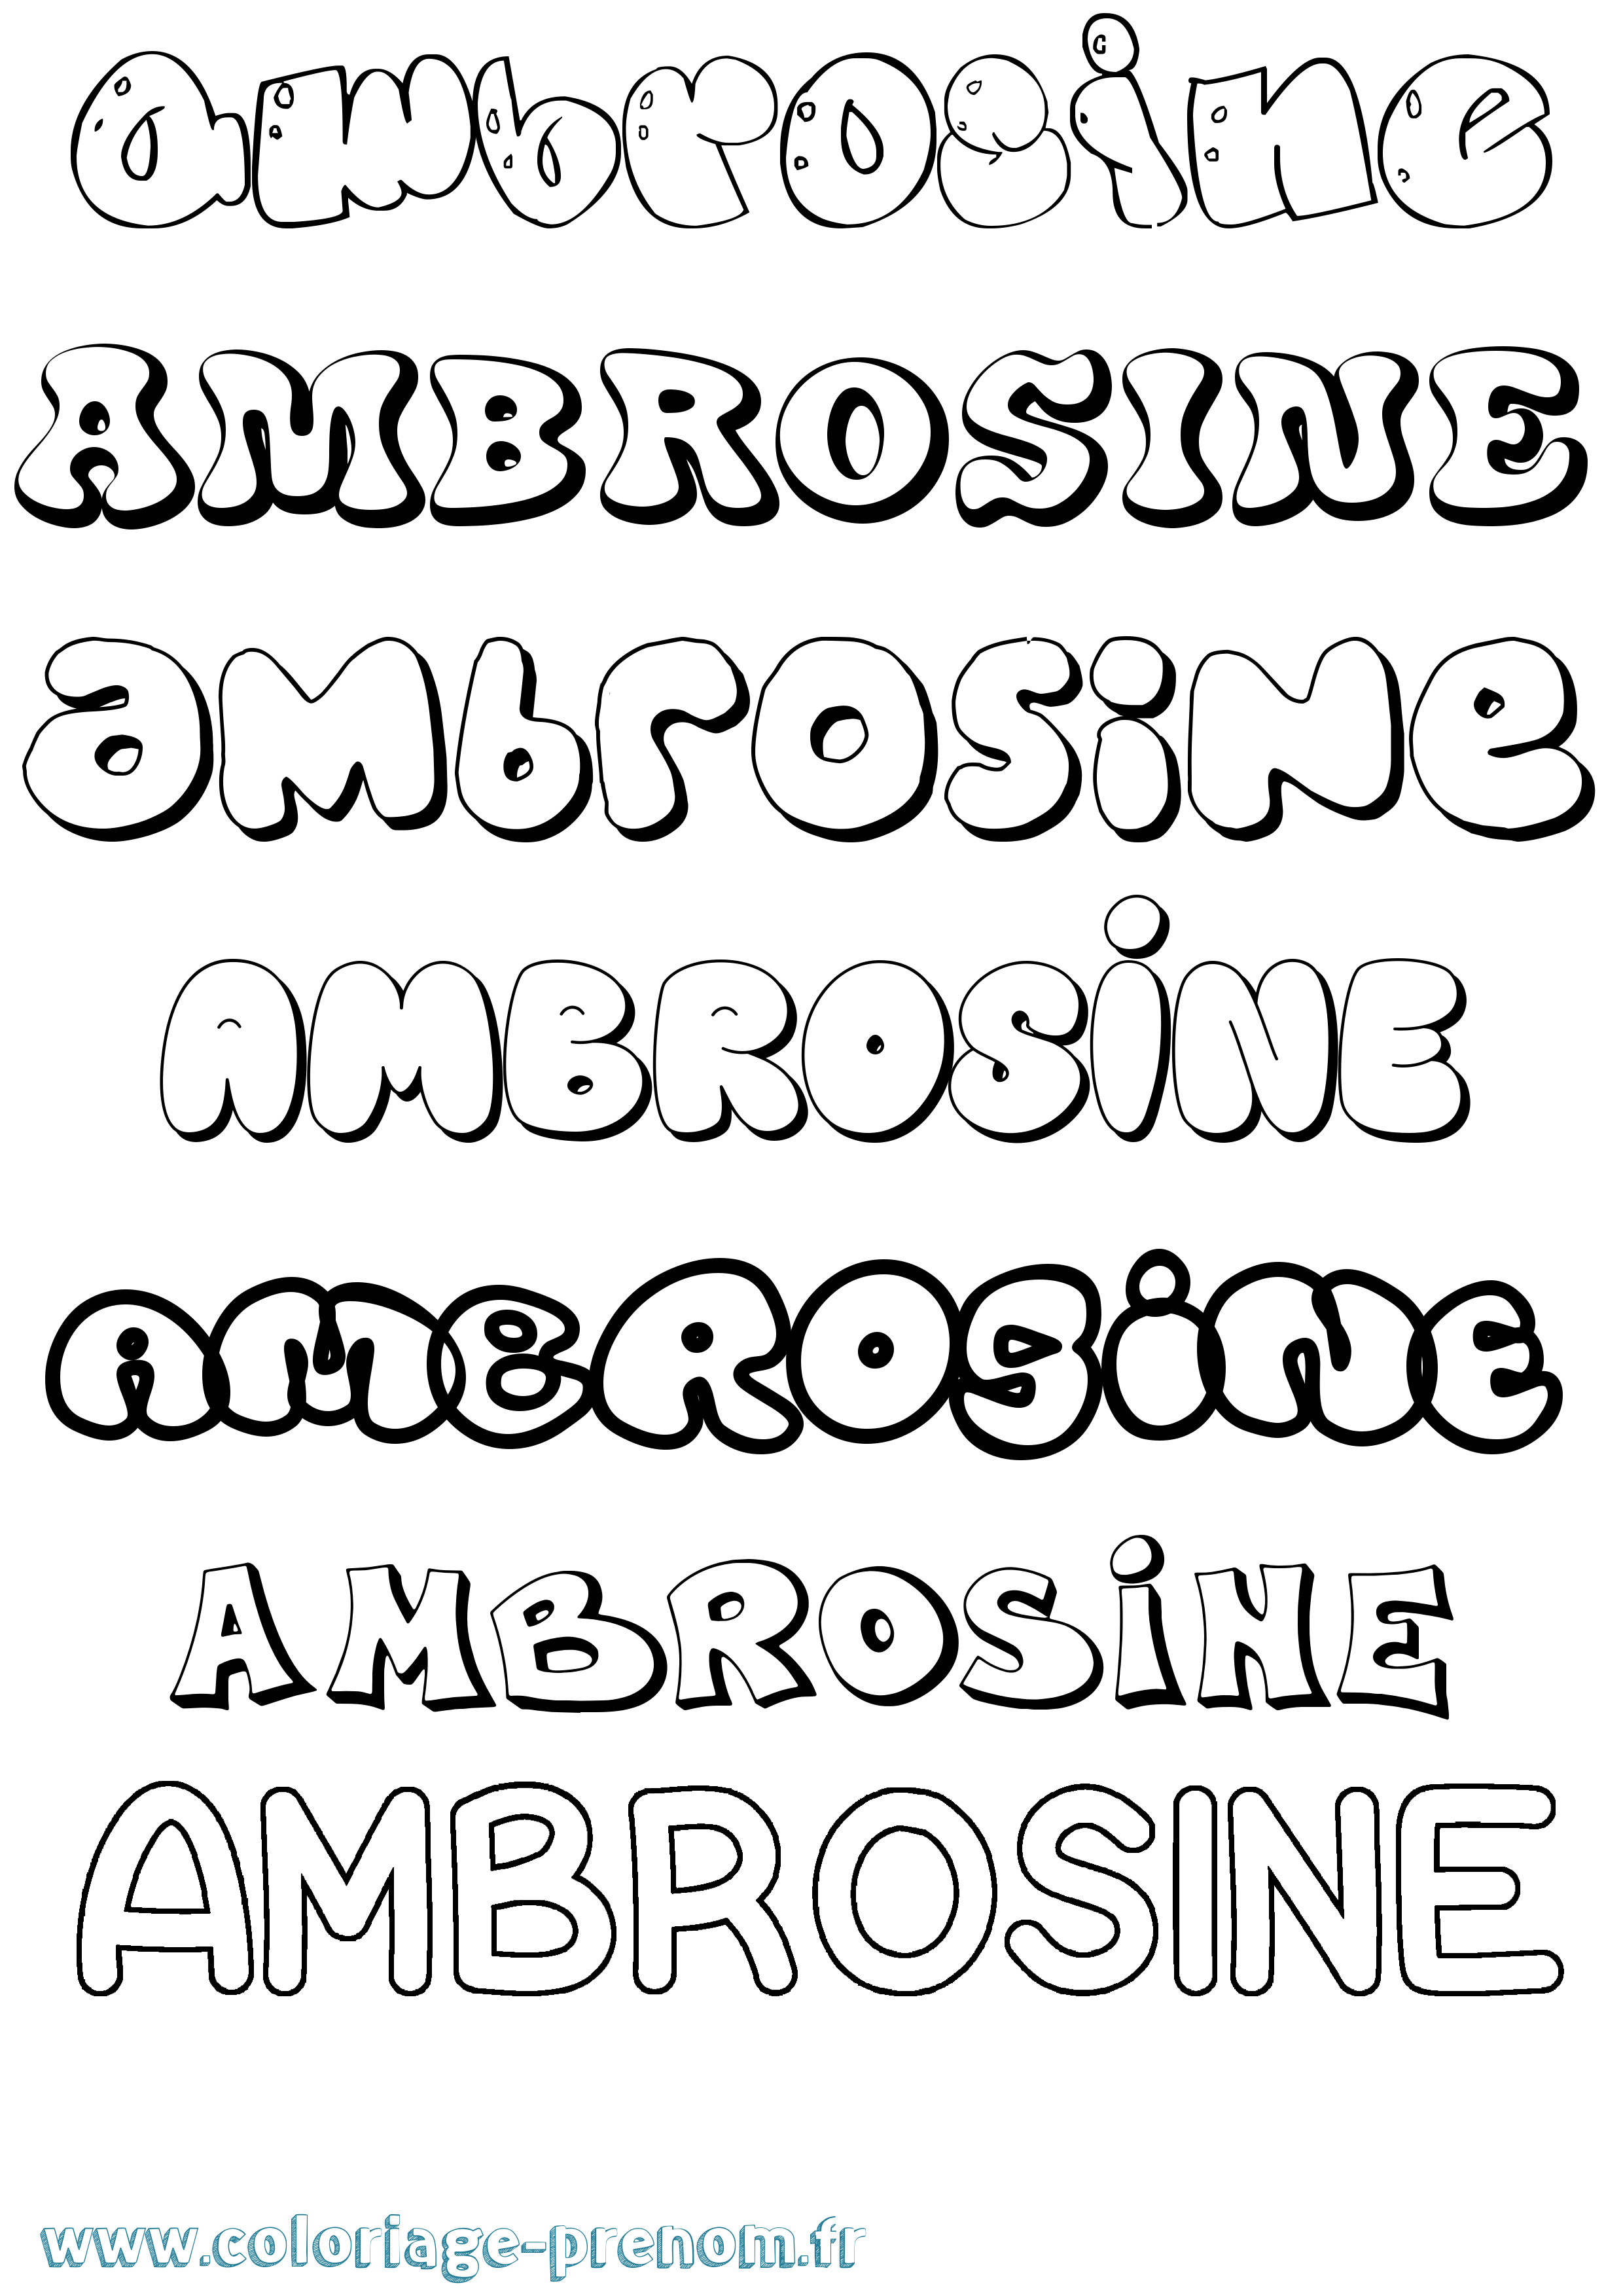 Coloriage prénom Ambrosine Bubble